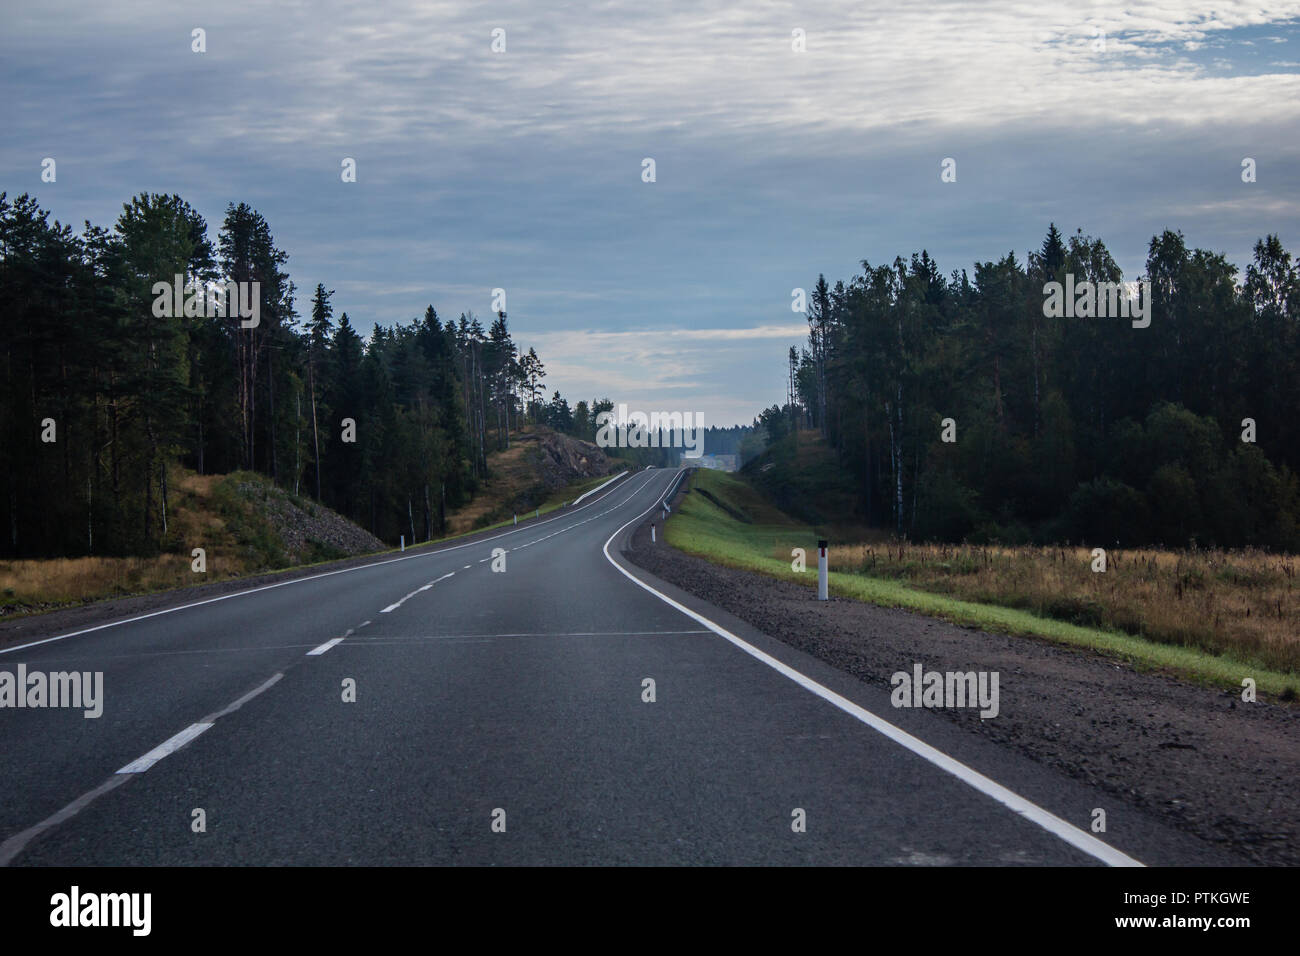 Russian roads in Karelia. Travel by road. Asphalt road. Smooth road car. Stock Photo